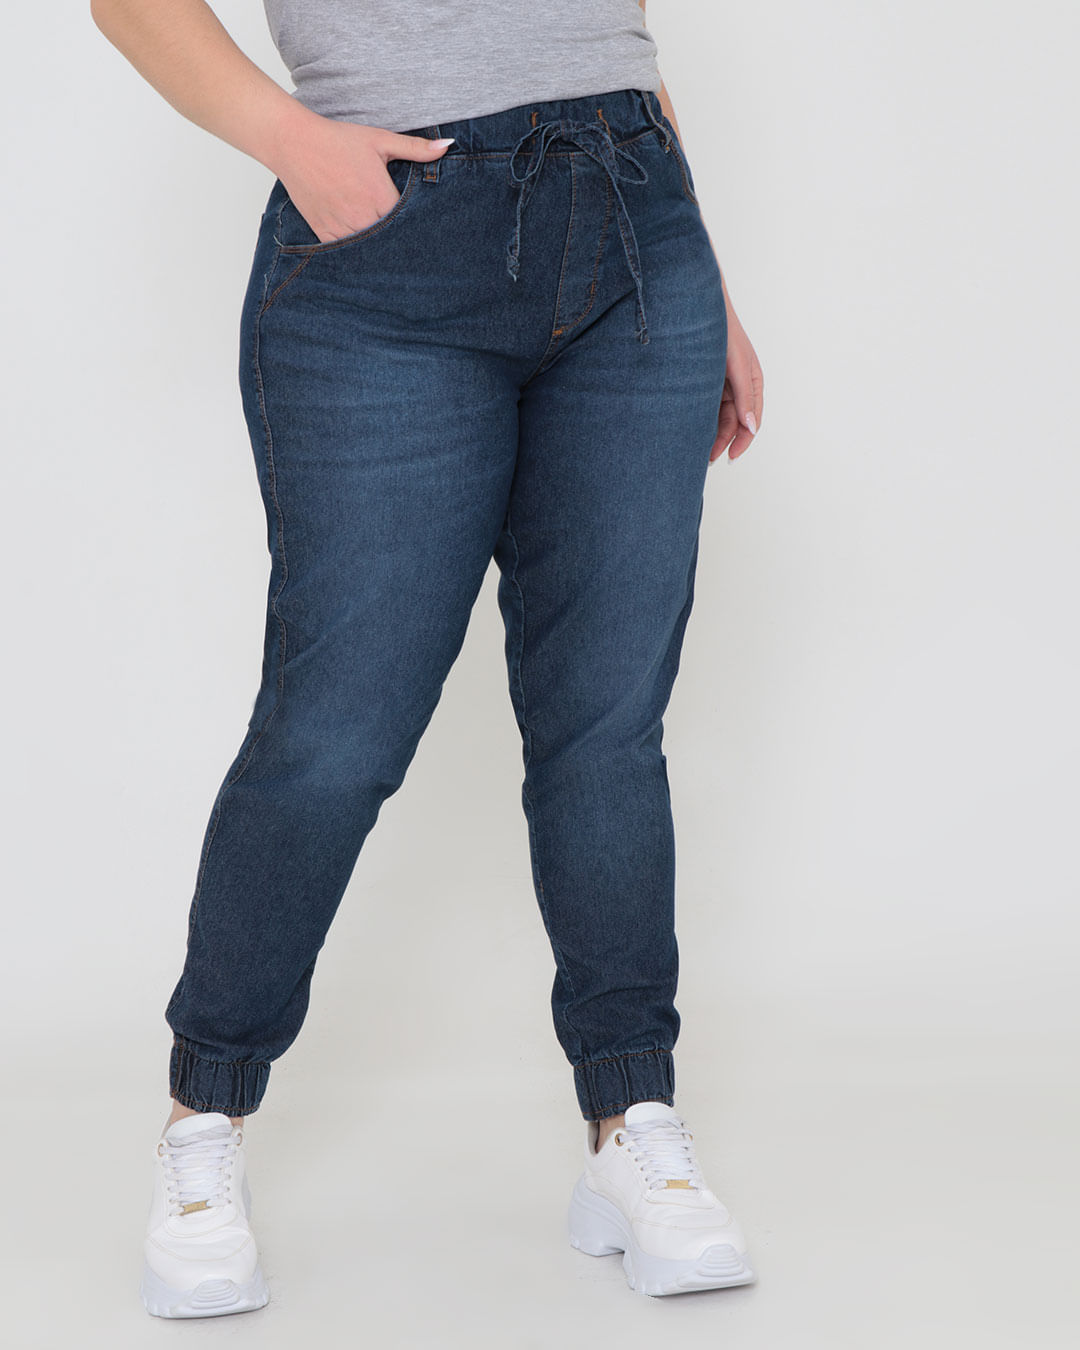 Calca-Jeans-Plus-Size-Jogger-Basica-Denim-Azul-Escuro